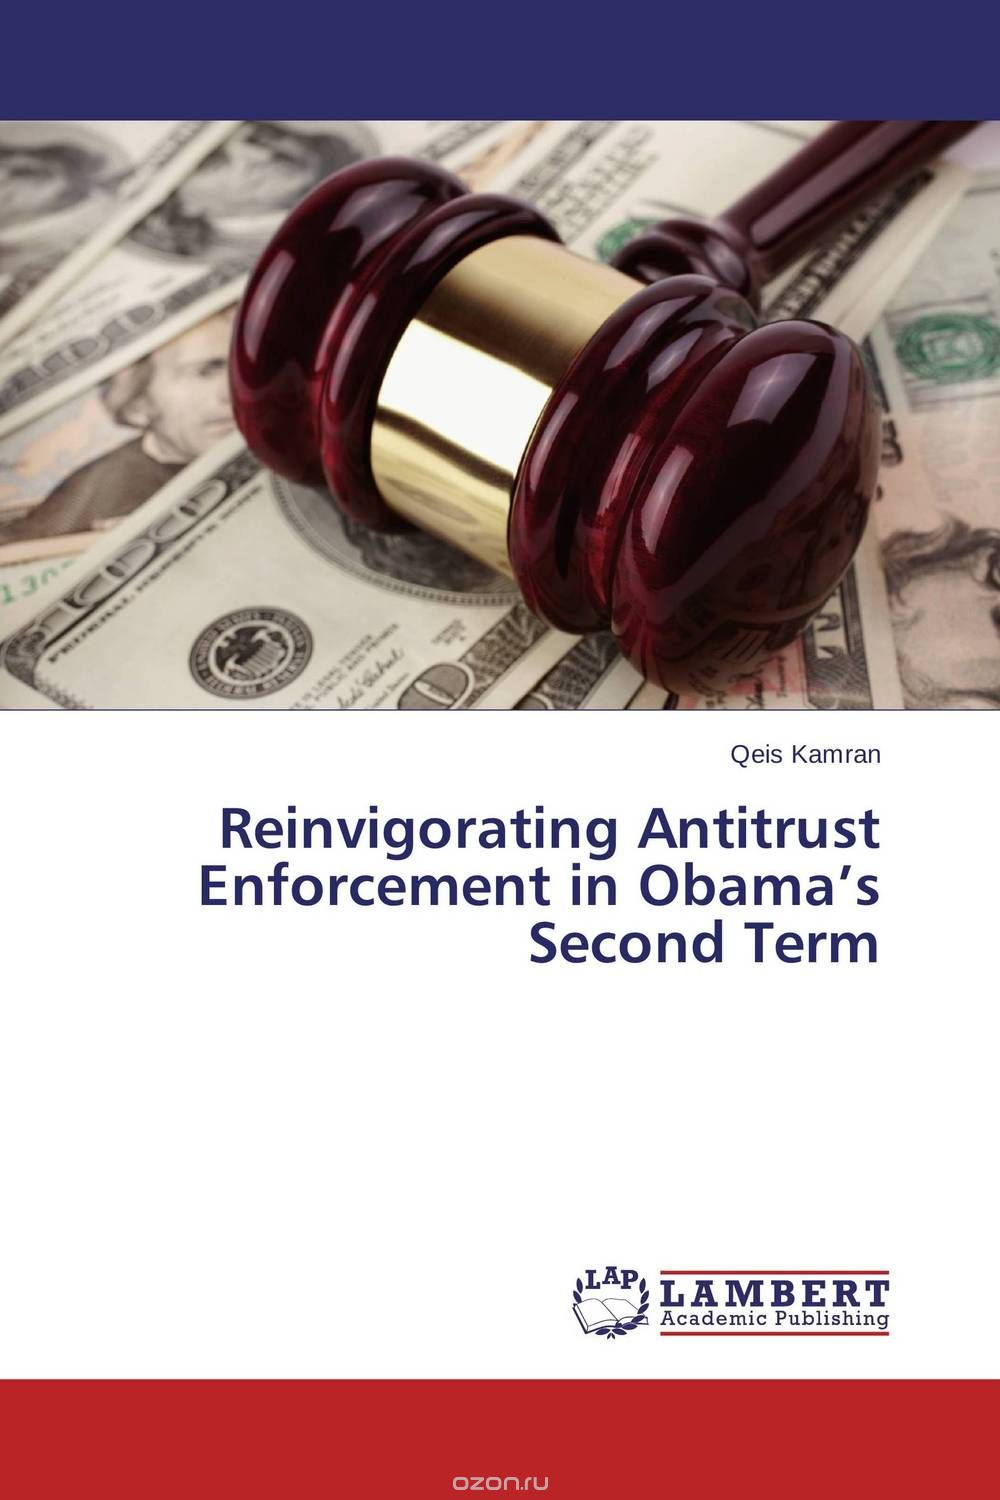 Reinvigorating Antitrust Enforcement in Obama’s Second Term